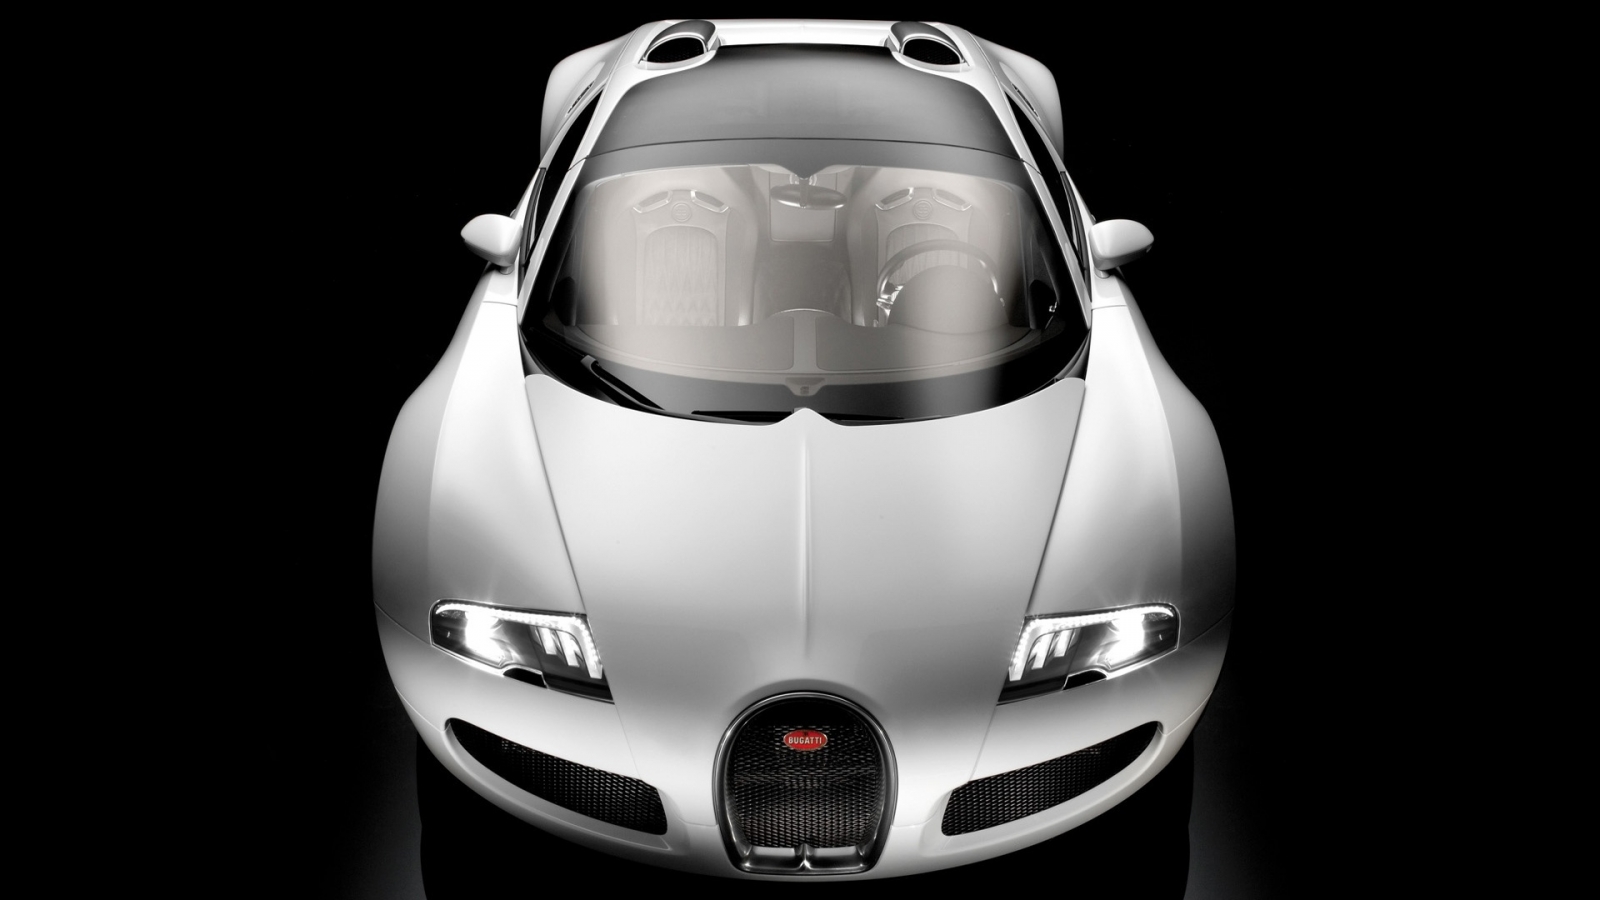 Bugatti Veyron 16.4 Grand Sport 2009 - Front Top Studio for 1600 x 900 HDTV resolution